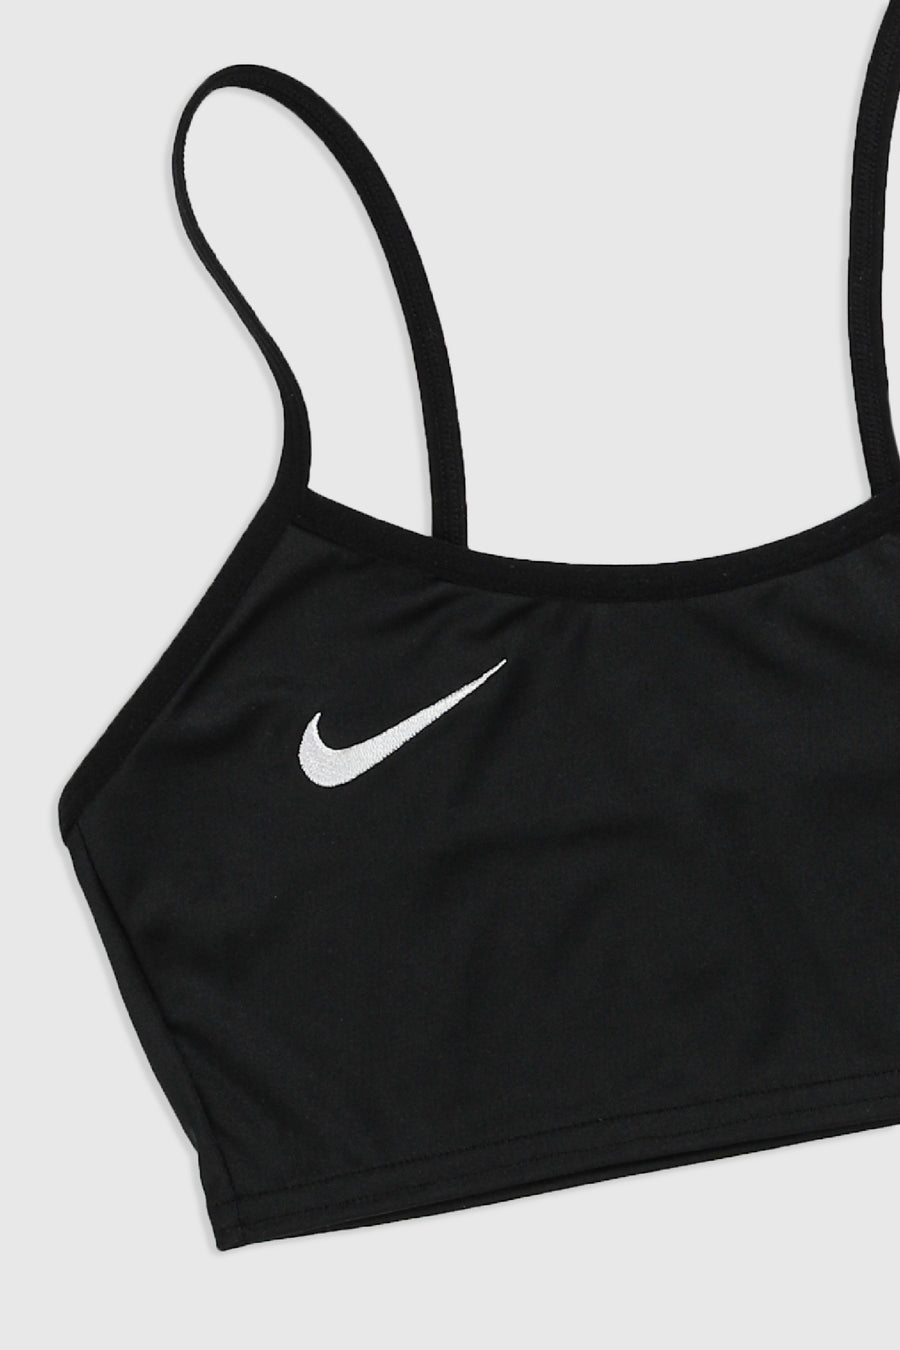 Rework Nike Athletic Bra Top - XS